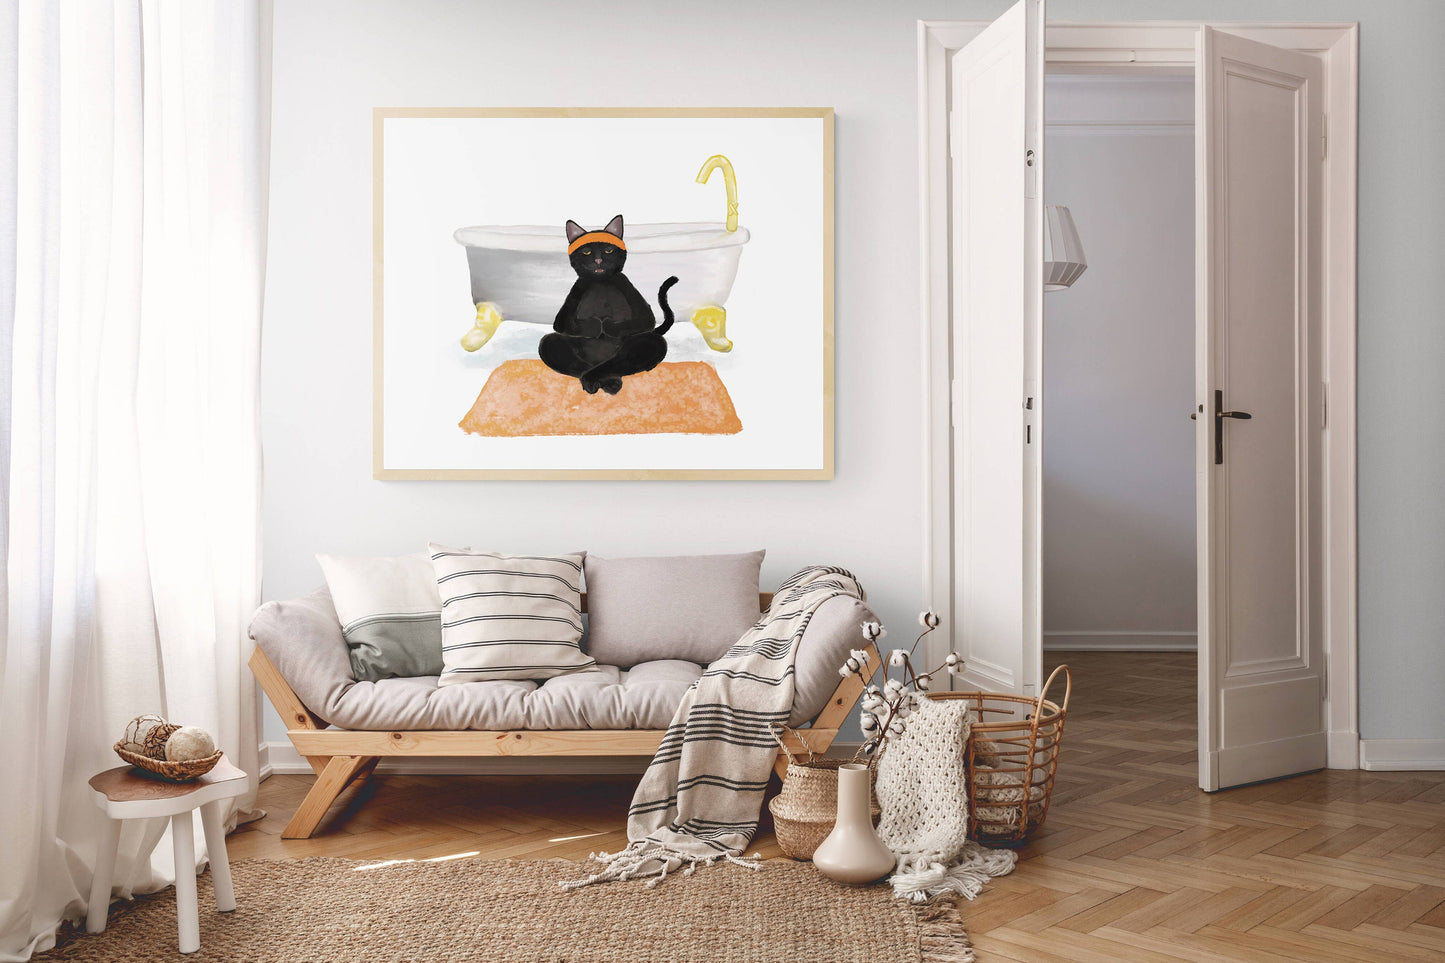 Meditating Black Cat Print, Black Cat Doing Yoga in Bathroom Art, Bathroom Cat Painting, Cat Relaxing In Bath Print, Cat Lover Gift